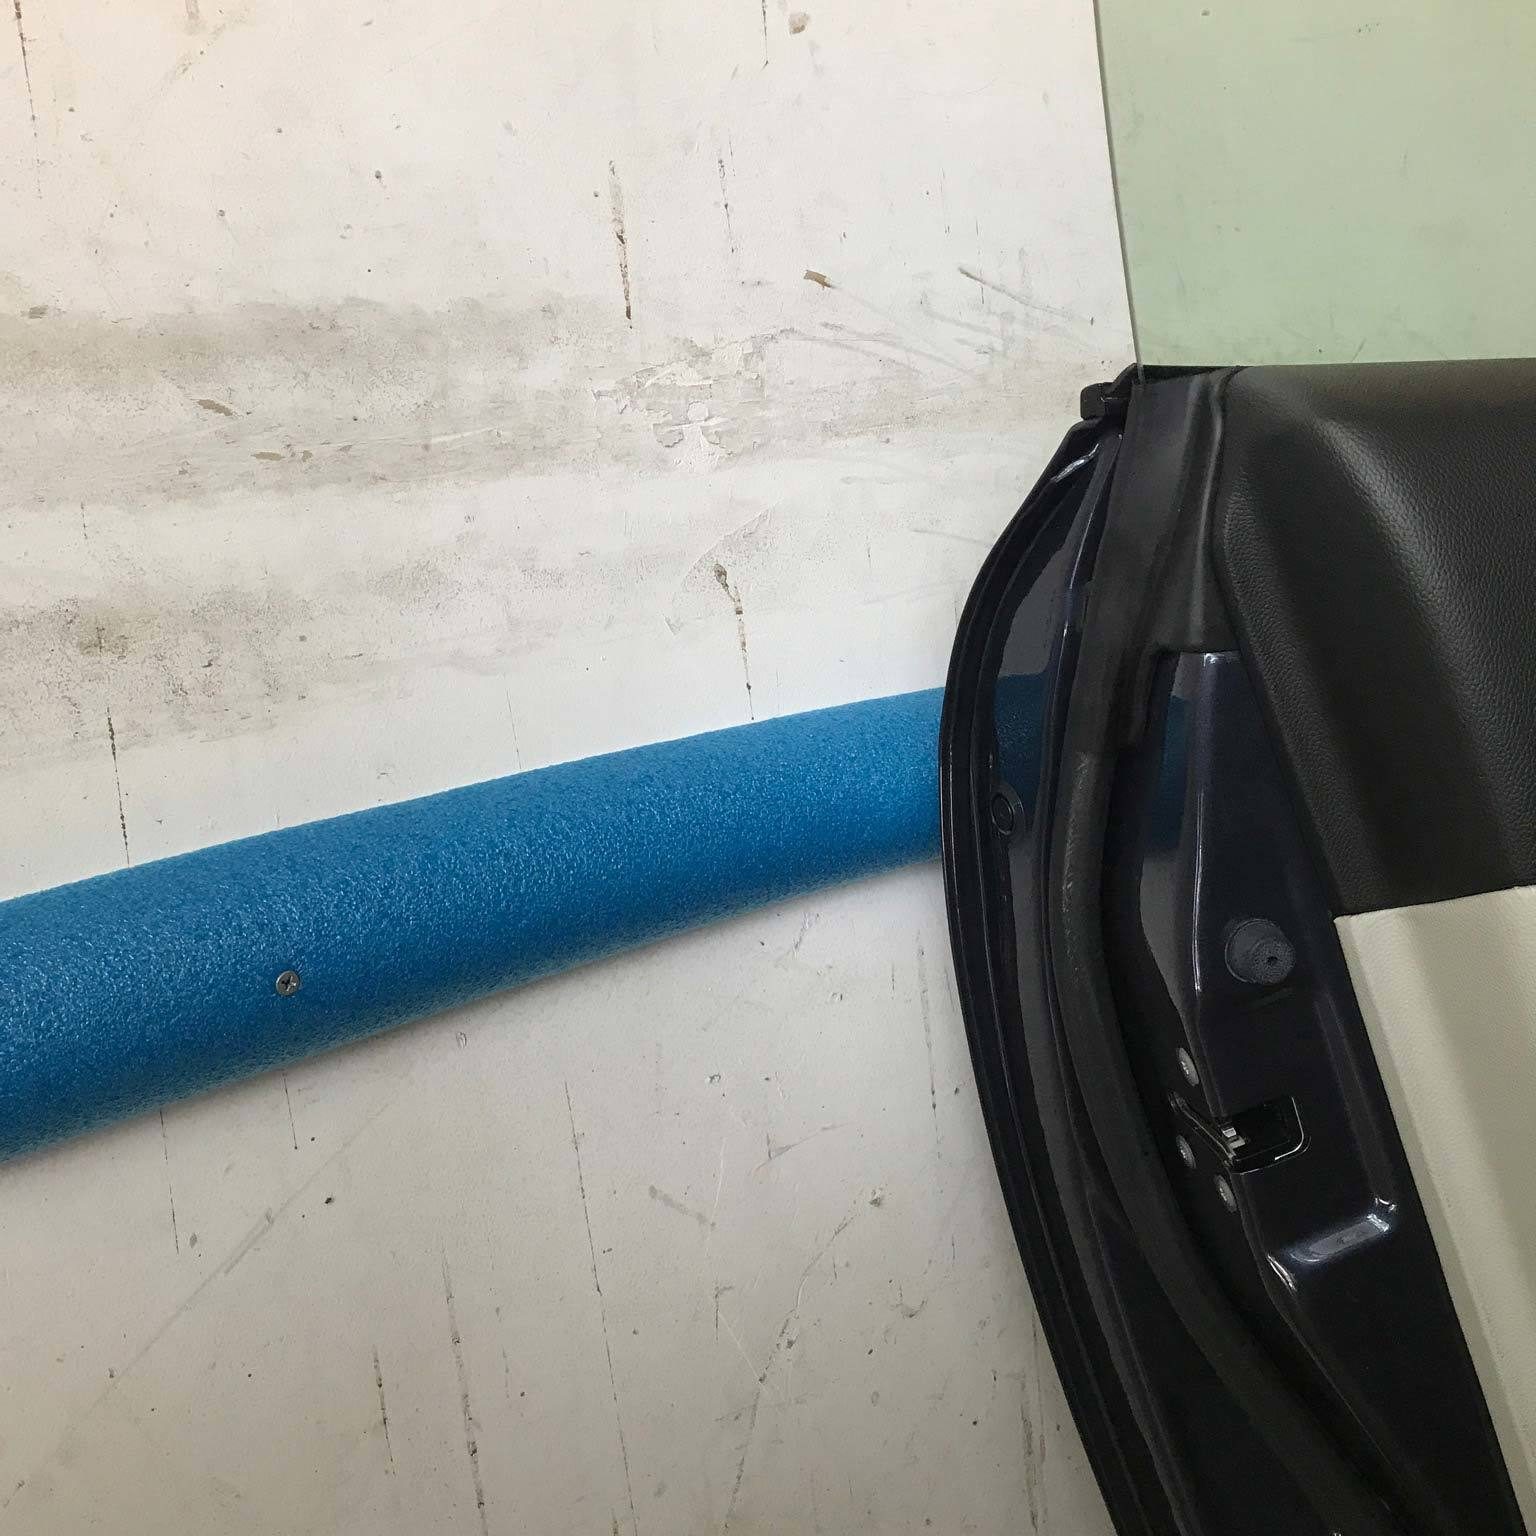 Anti-Ding Car Door Bumper pool noodle garage hack